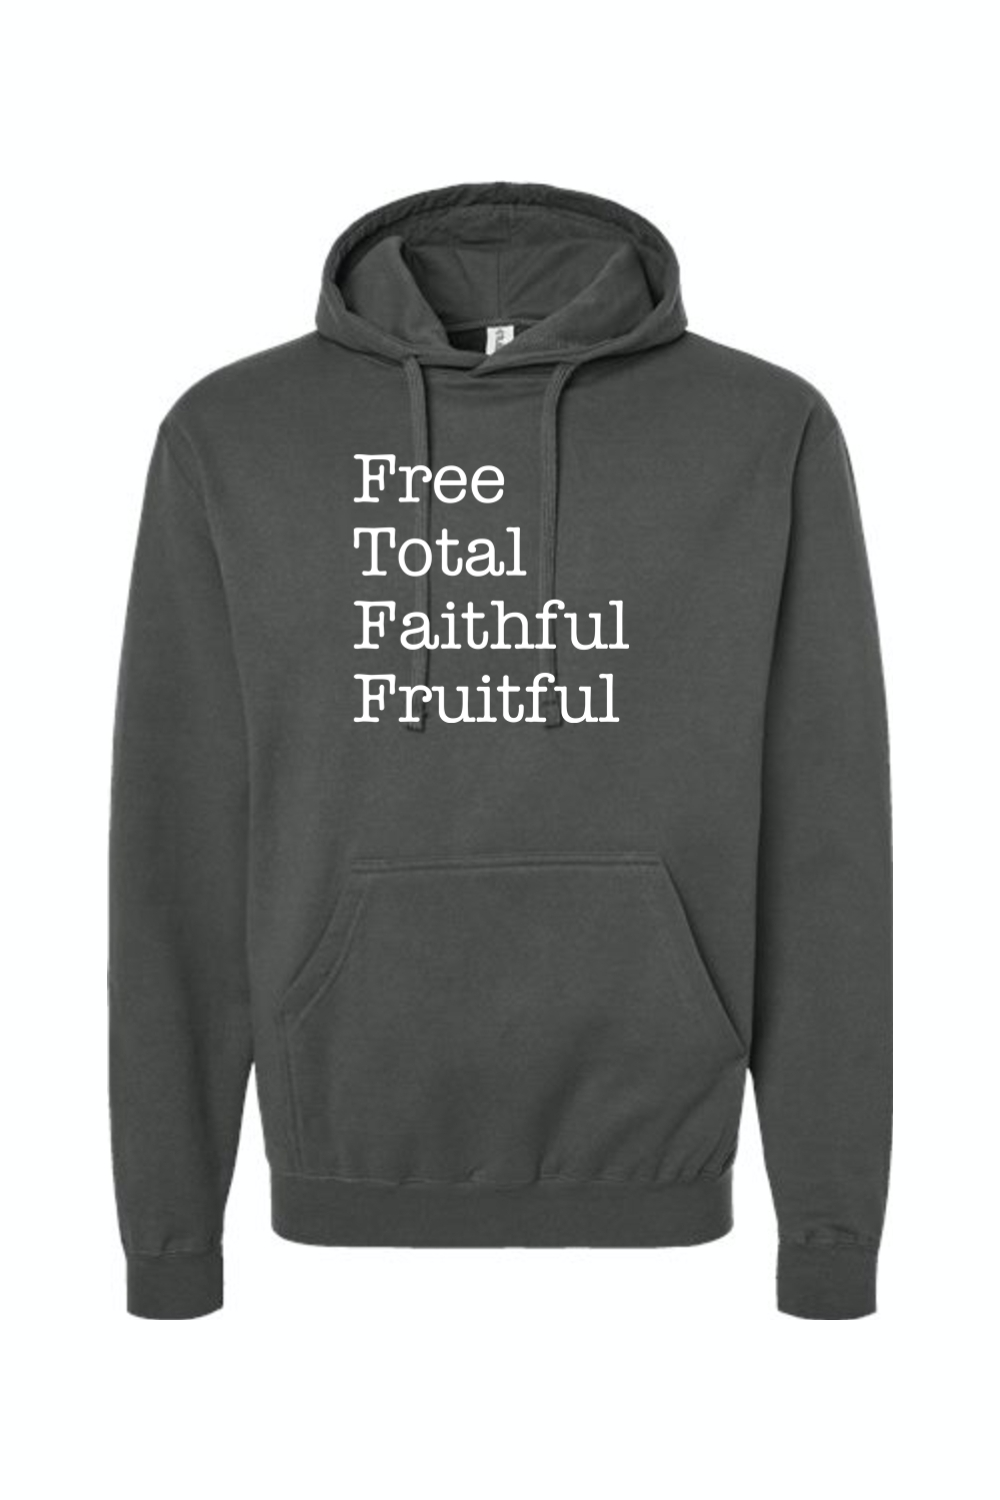 Free Total Faithful Fruitful - Theology of the Body Hoodie Sweatshirt